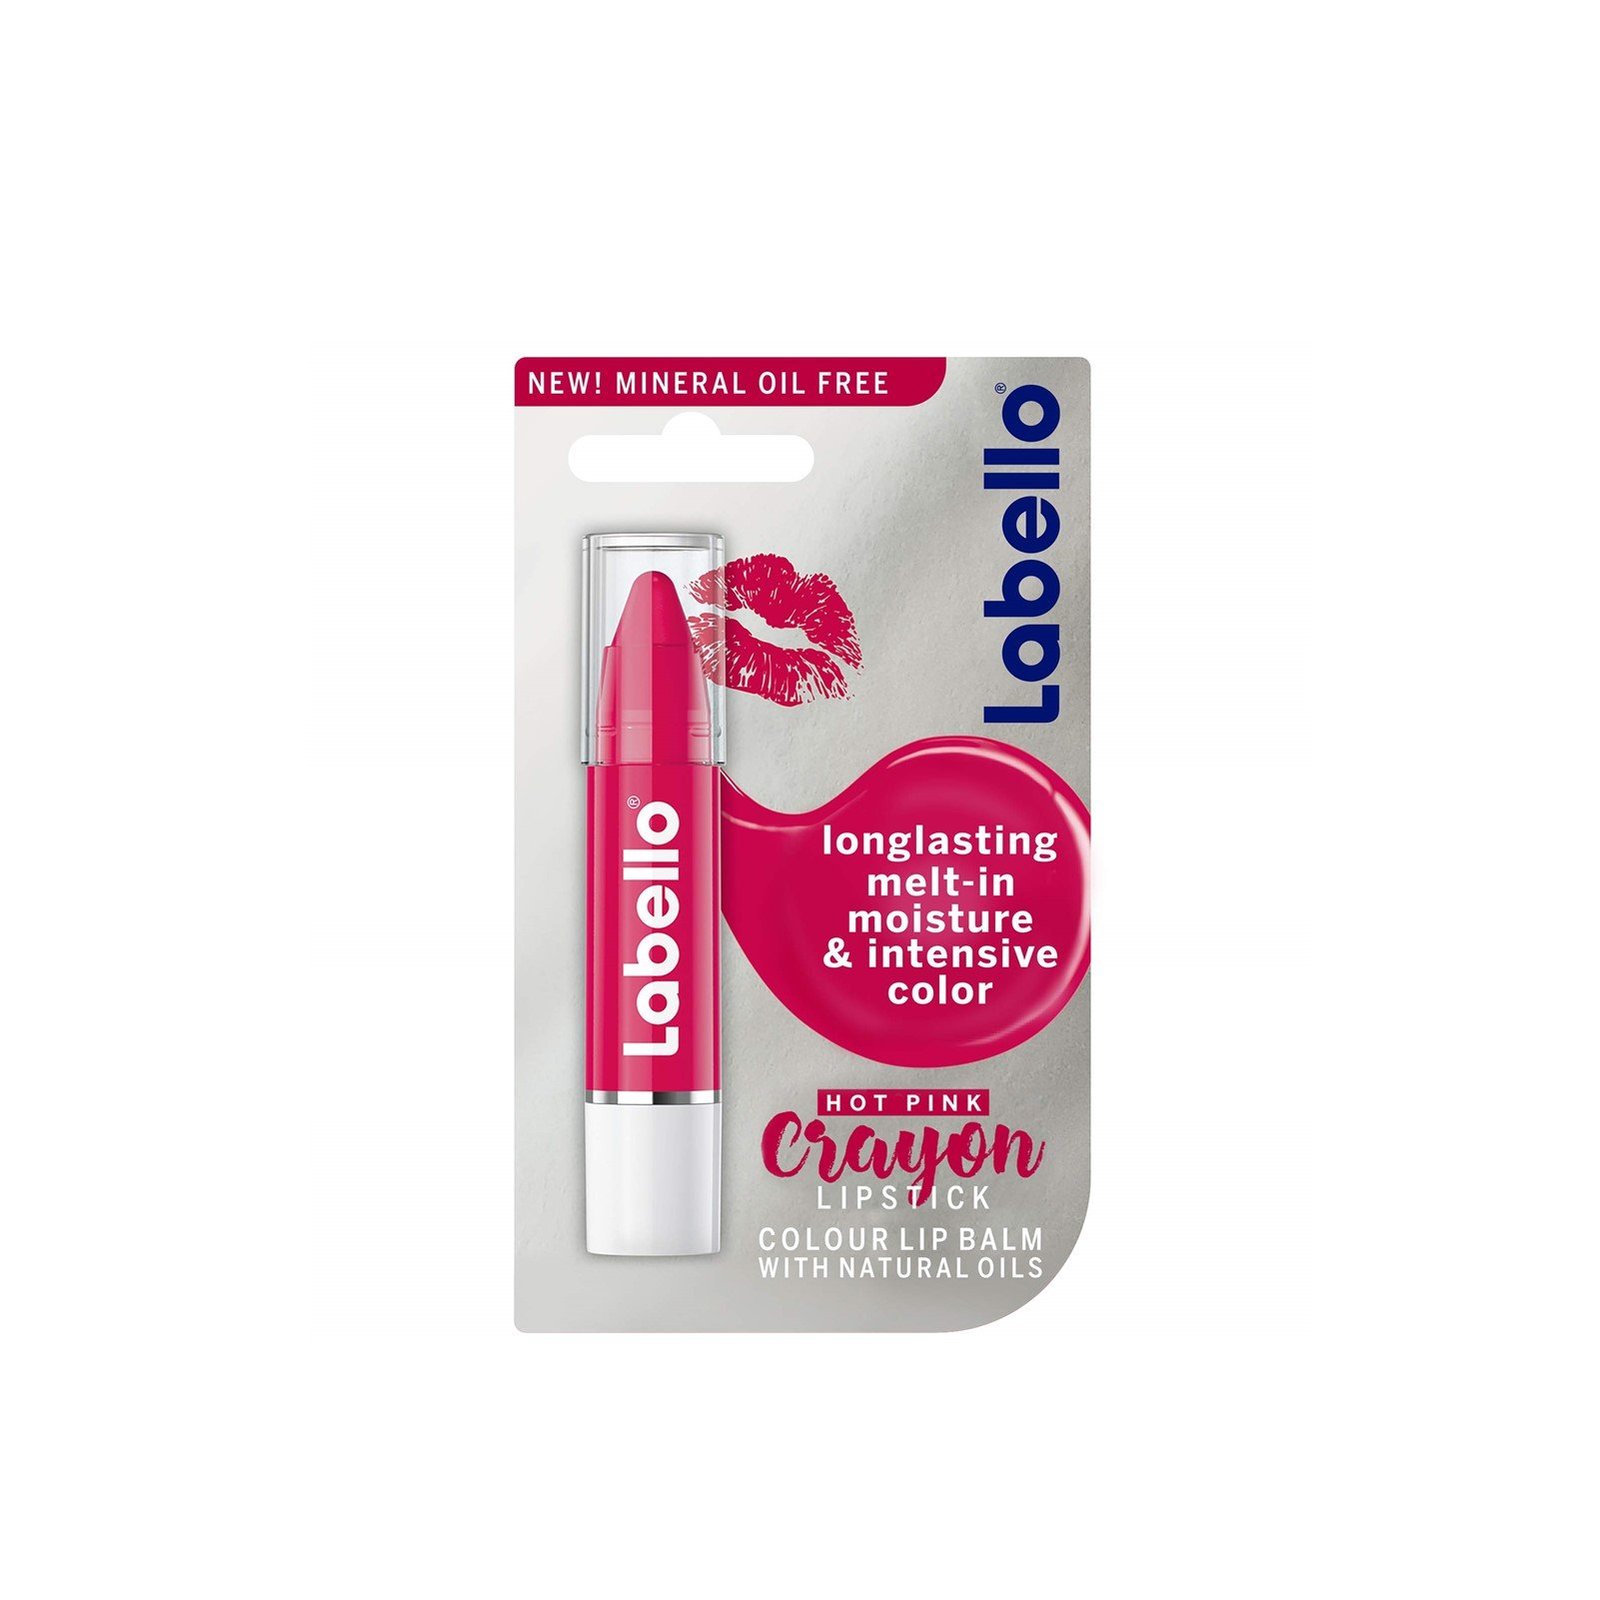 Labello Crayon Lipstick 02 Hot Pink 3g (0.1 oz)